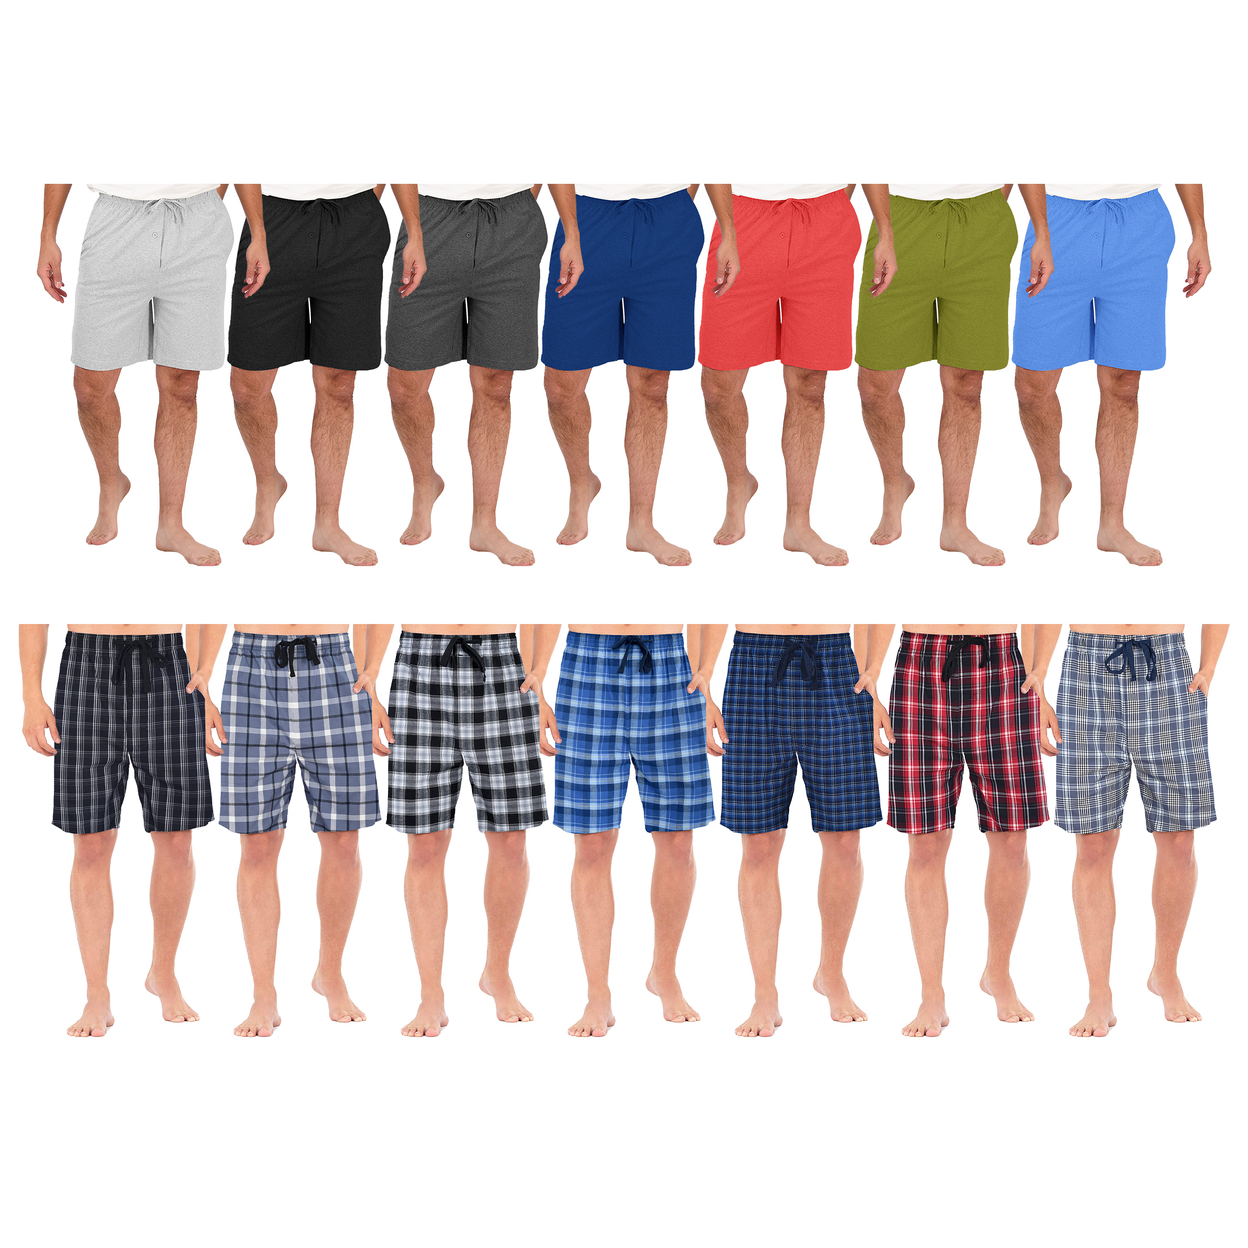 Multi-Pack: Men's Ultra Soft Knit Lounge Pajama Sleep Shorts - Plaid, 3-pack, Medium